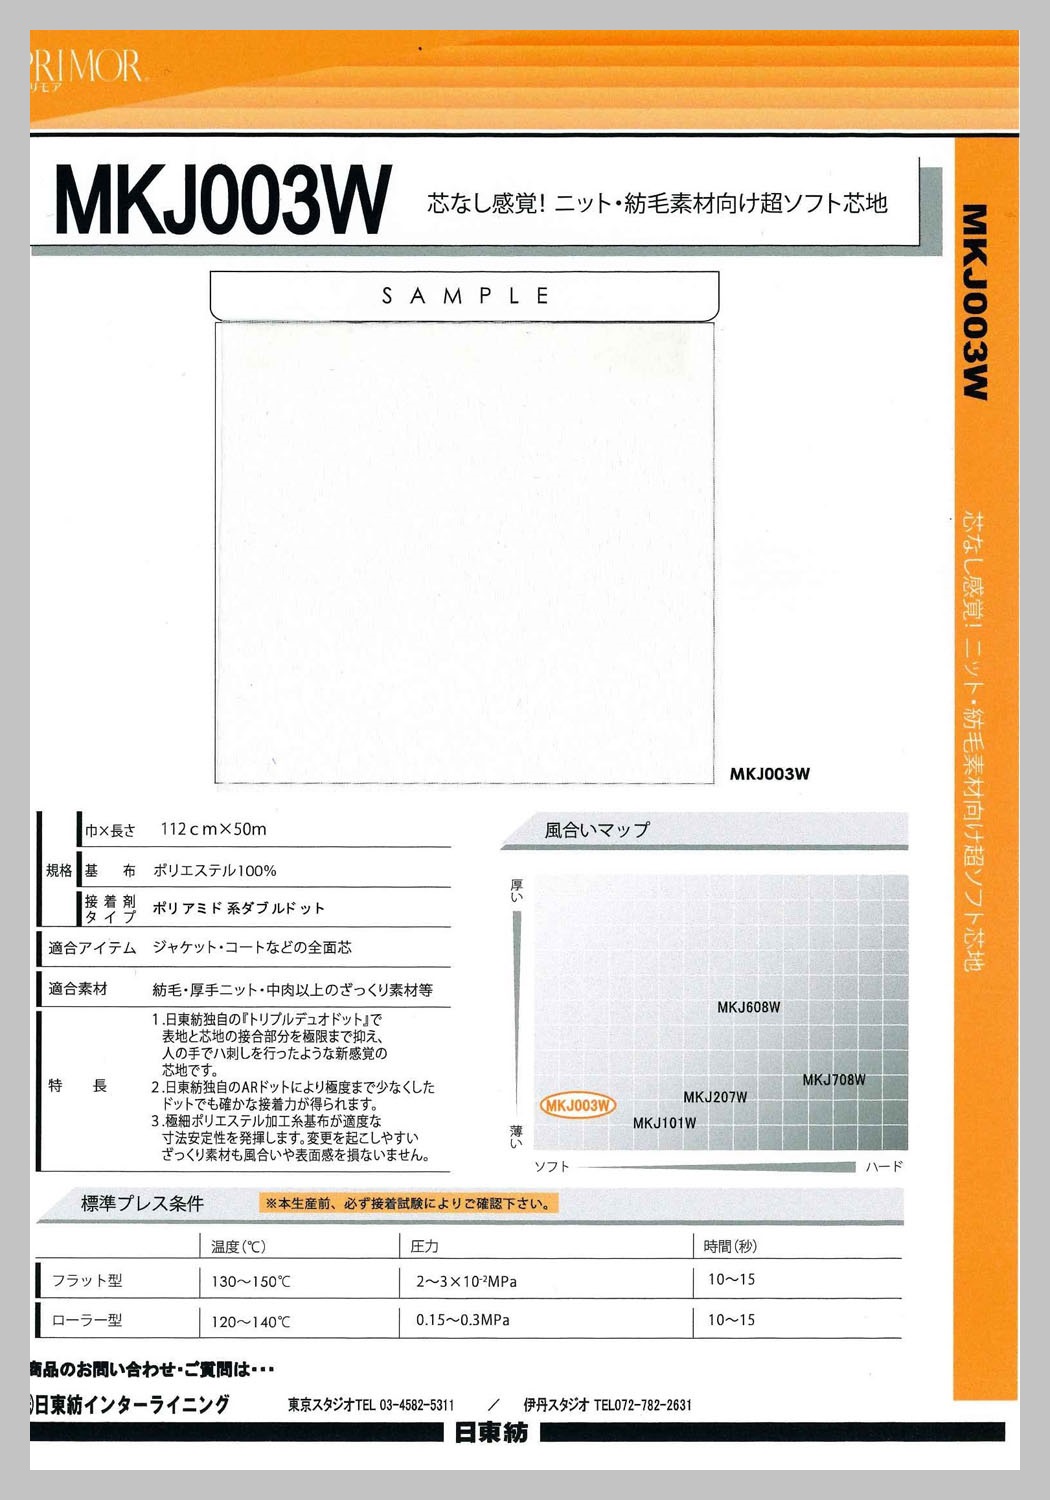 MKJ003W ジャケット・コート素材向け超ソフト芯地 サンプル帳